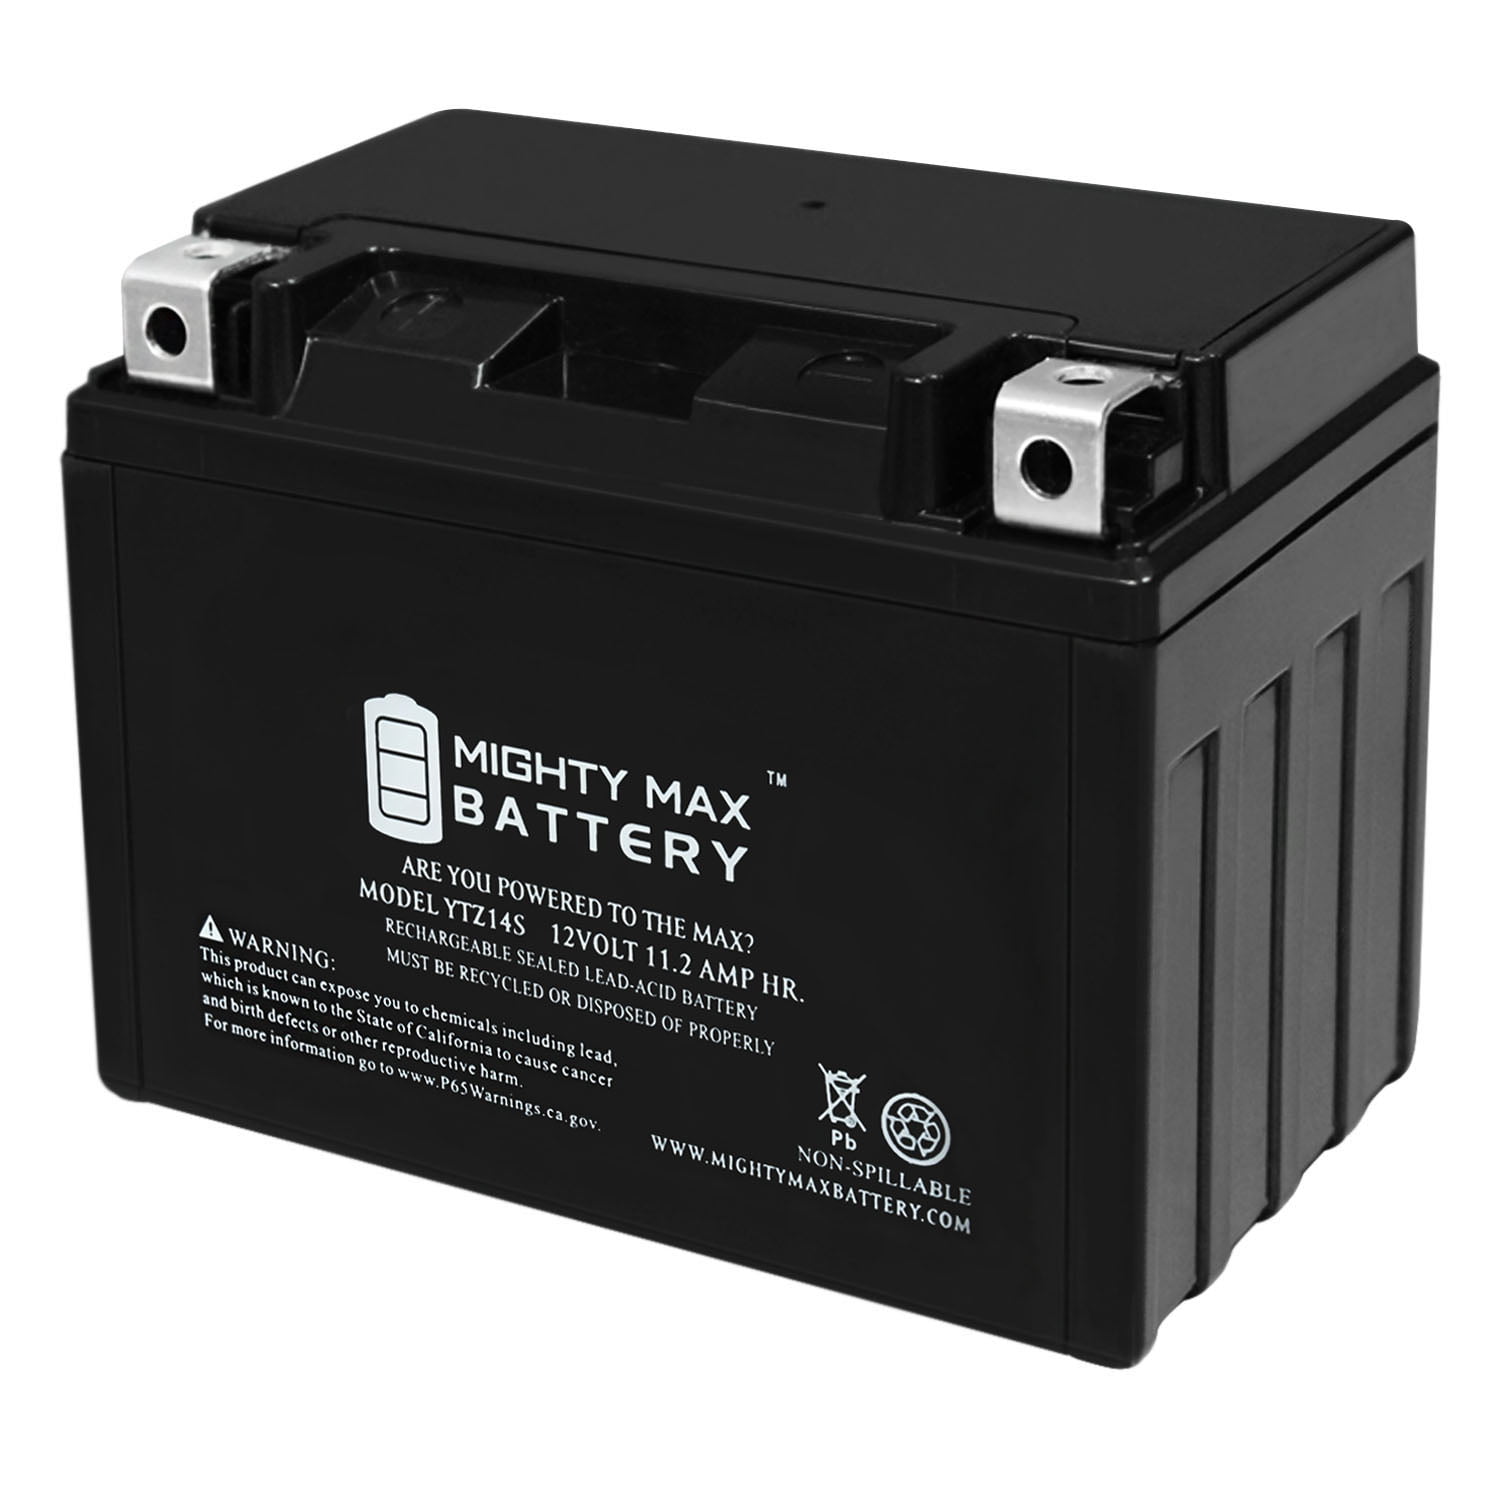 12V 11.2Ah Battery Replacement for Yuasa YTZ14S